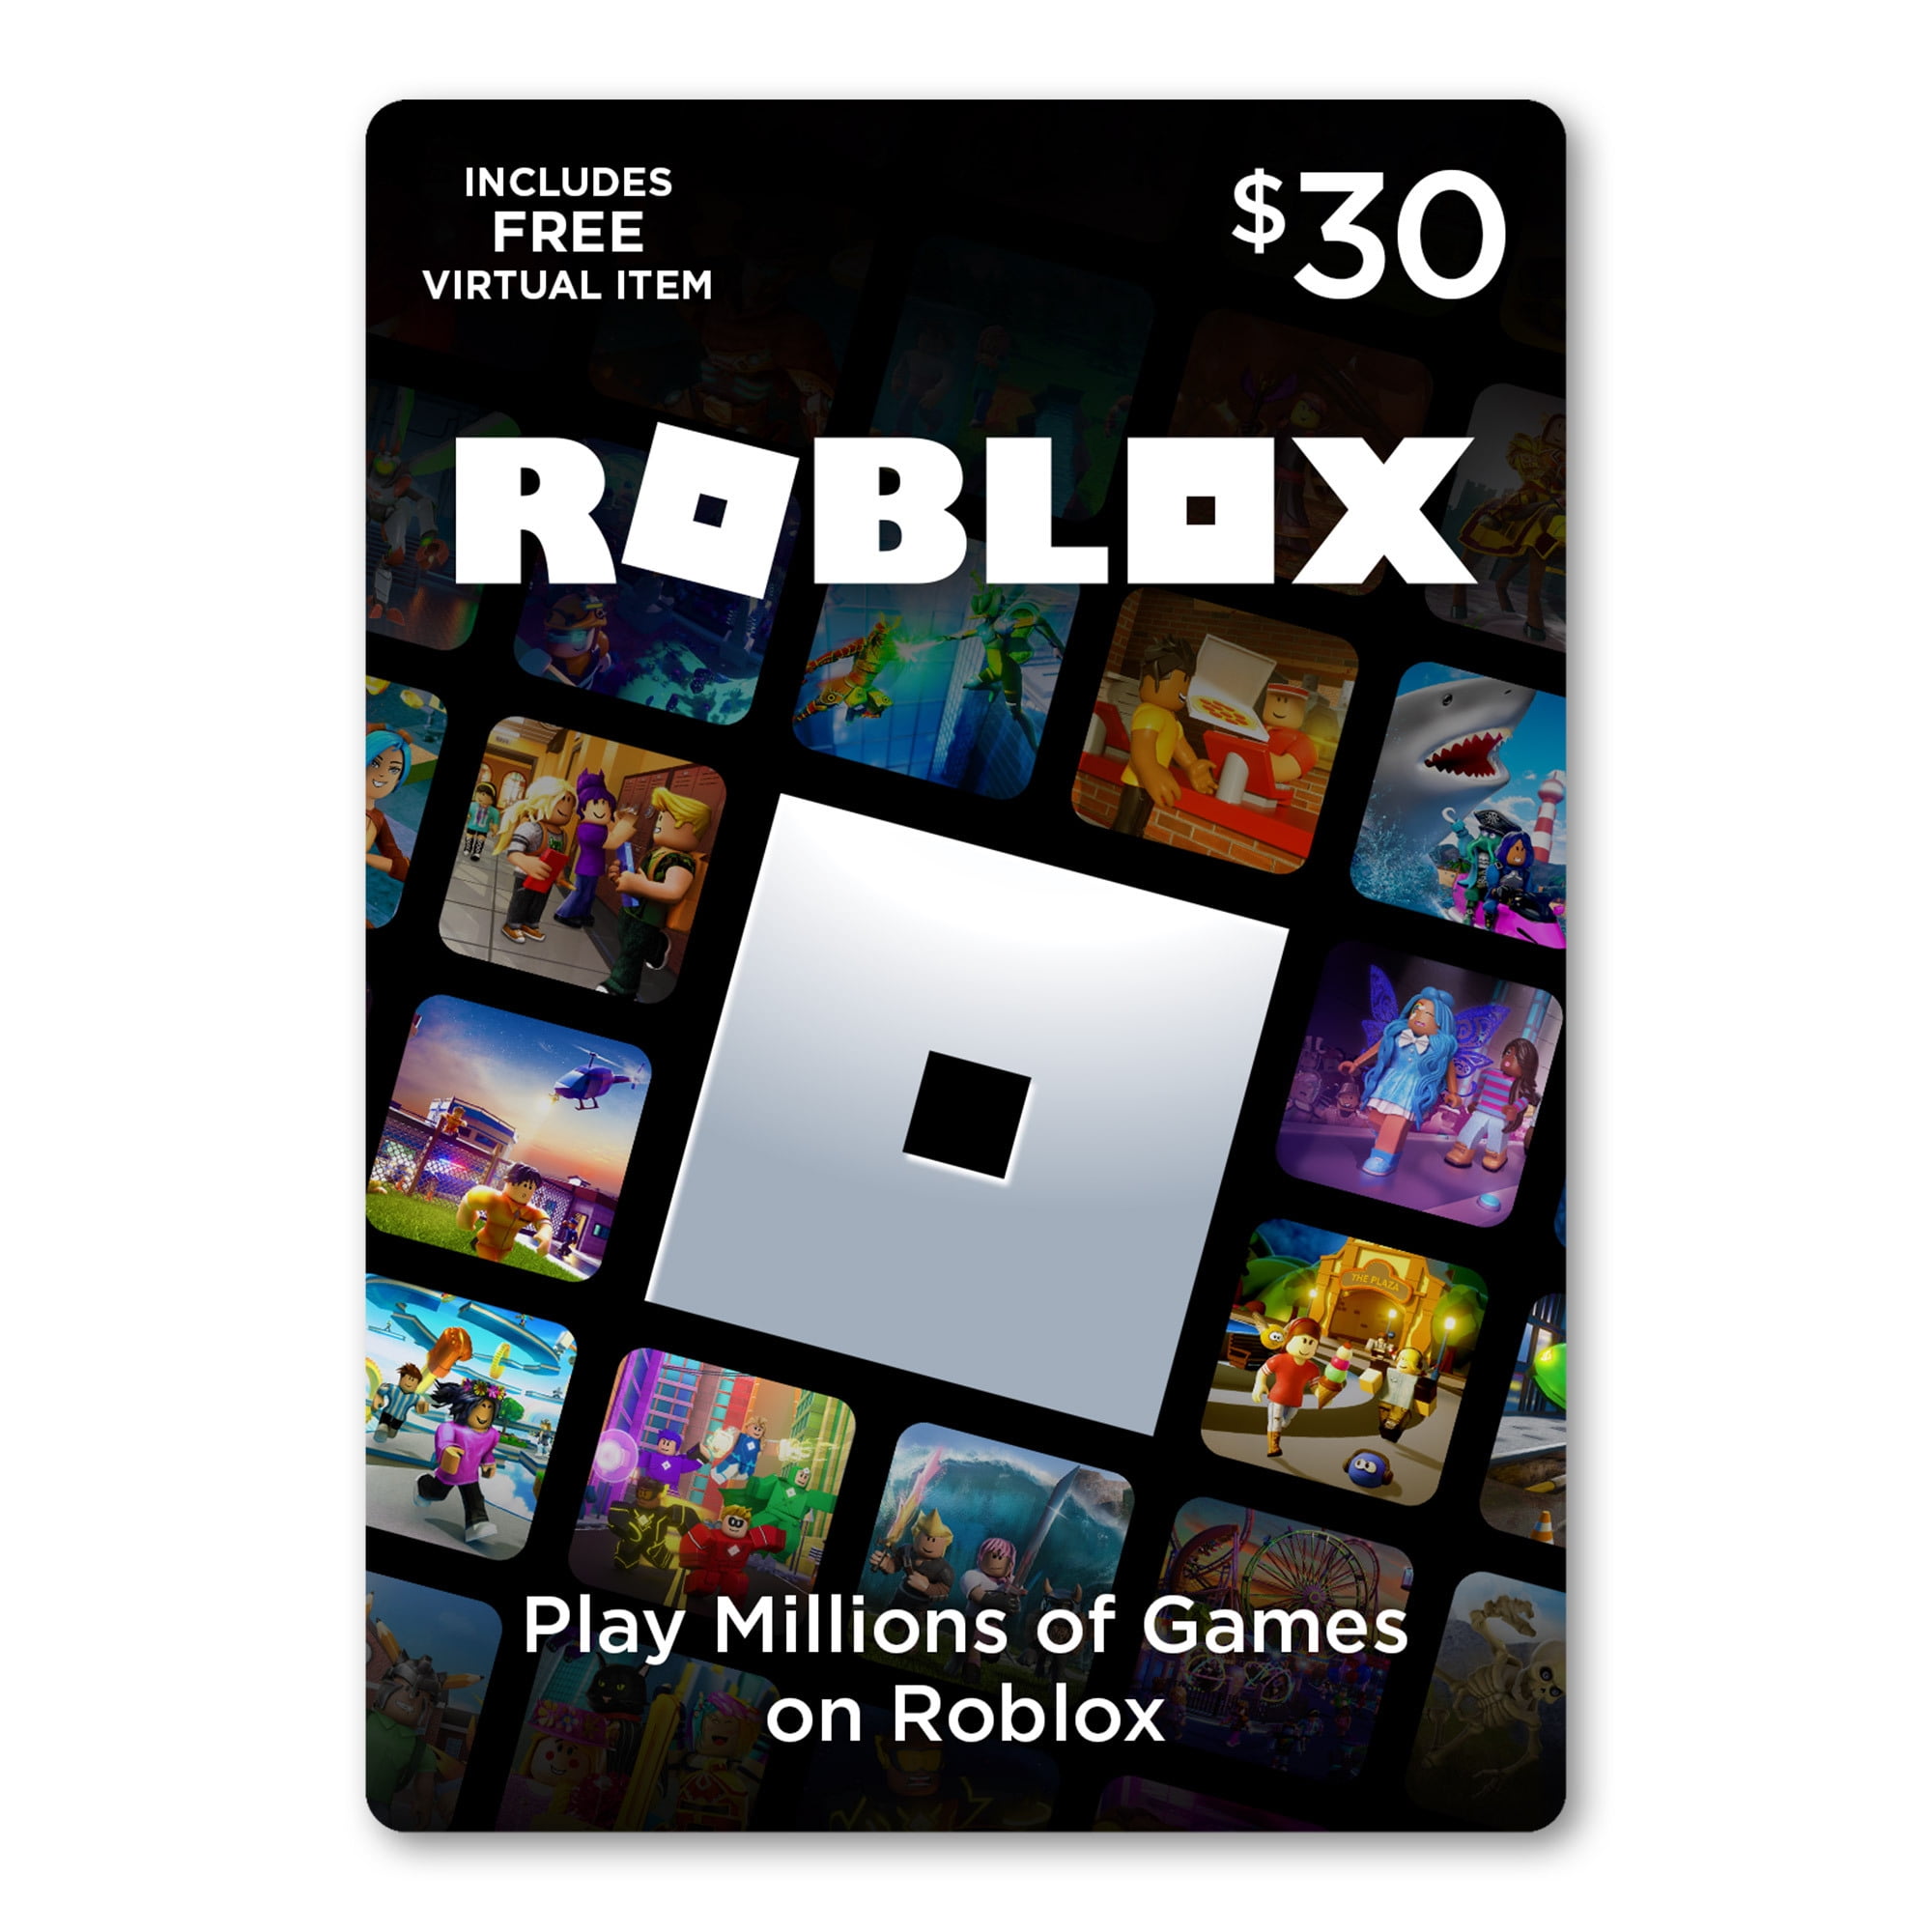 Roblox 30 Digital Gift Card Includes Exclusive Virtual Item Digital Download Walmart Com Walmart Com - how much is 30 credits on roblox